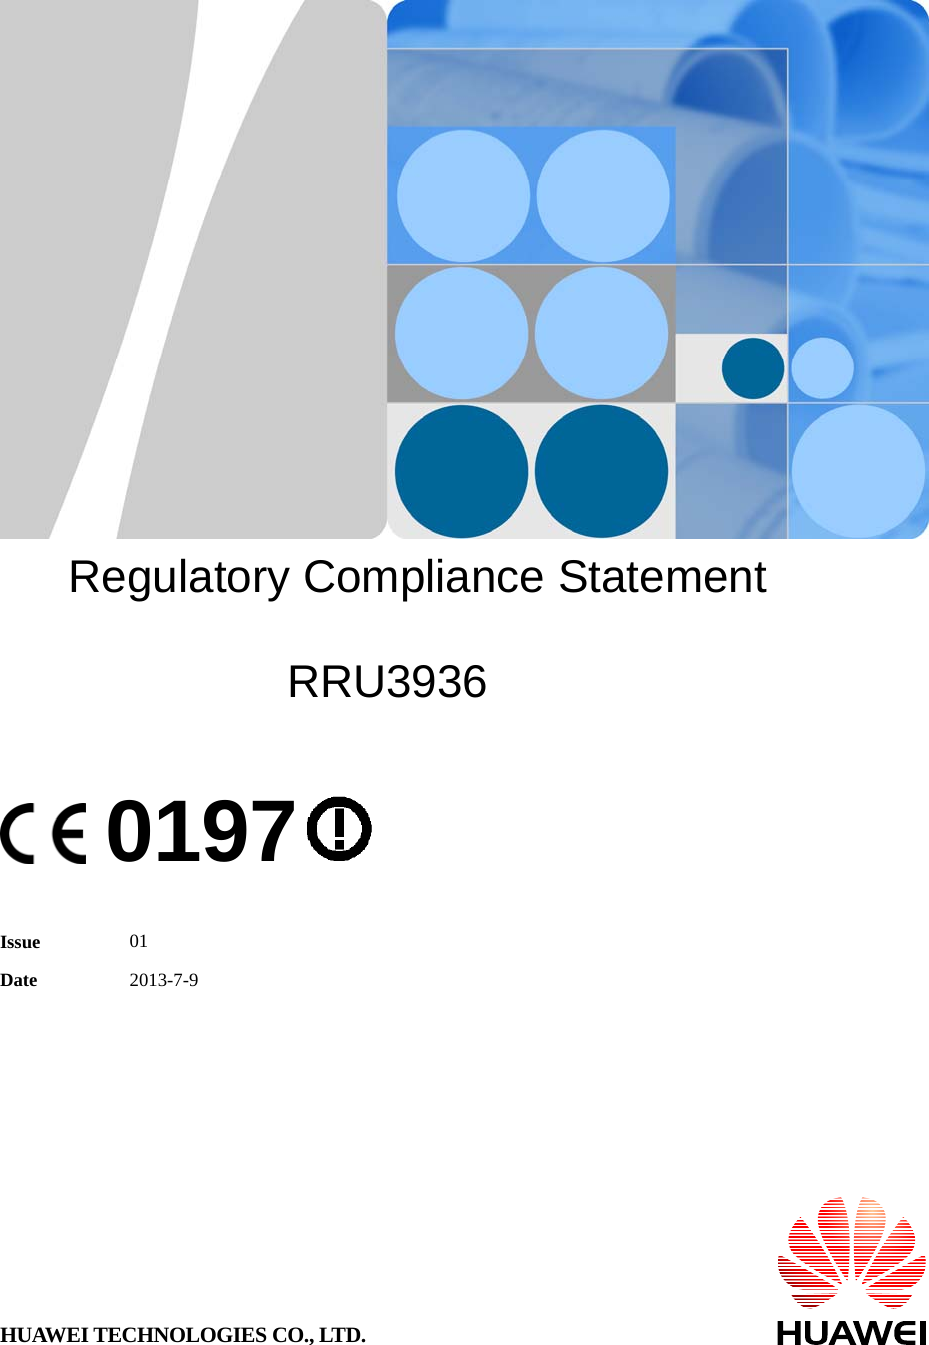        Regulatory Compliance Statement  RRU3936    0197   Issue  01 Date  2013-7-9 HUAWEI TECHNOLOGIES CO., LTD. 